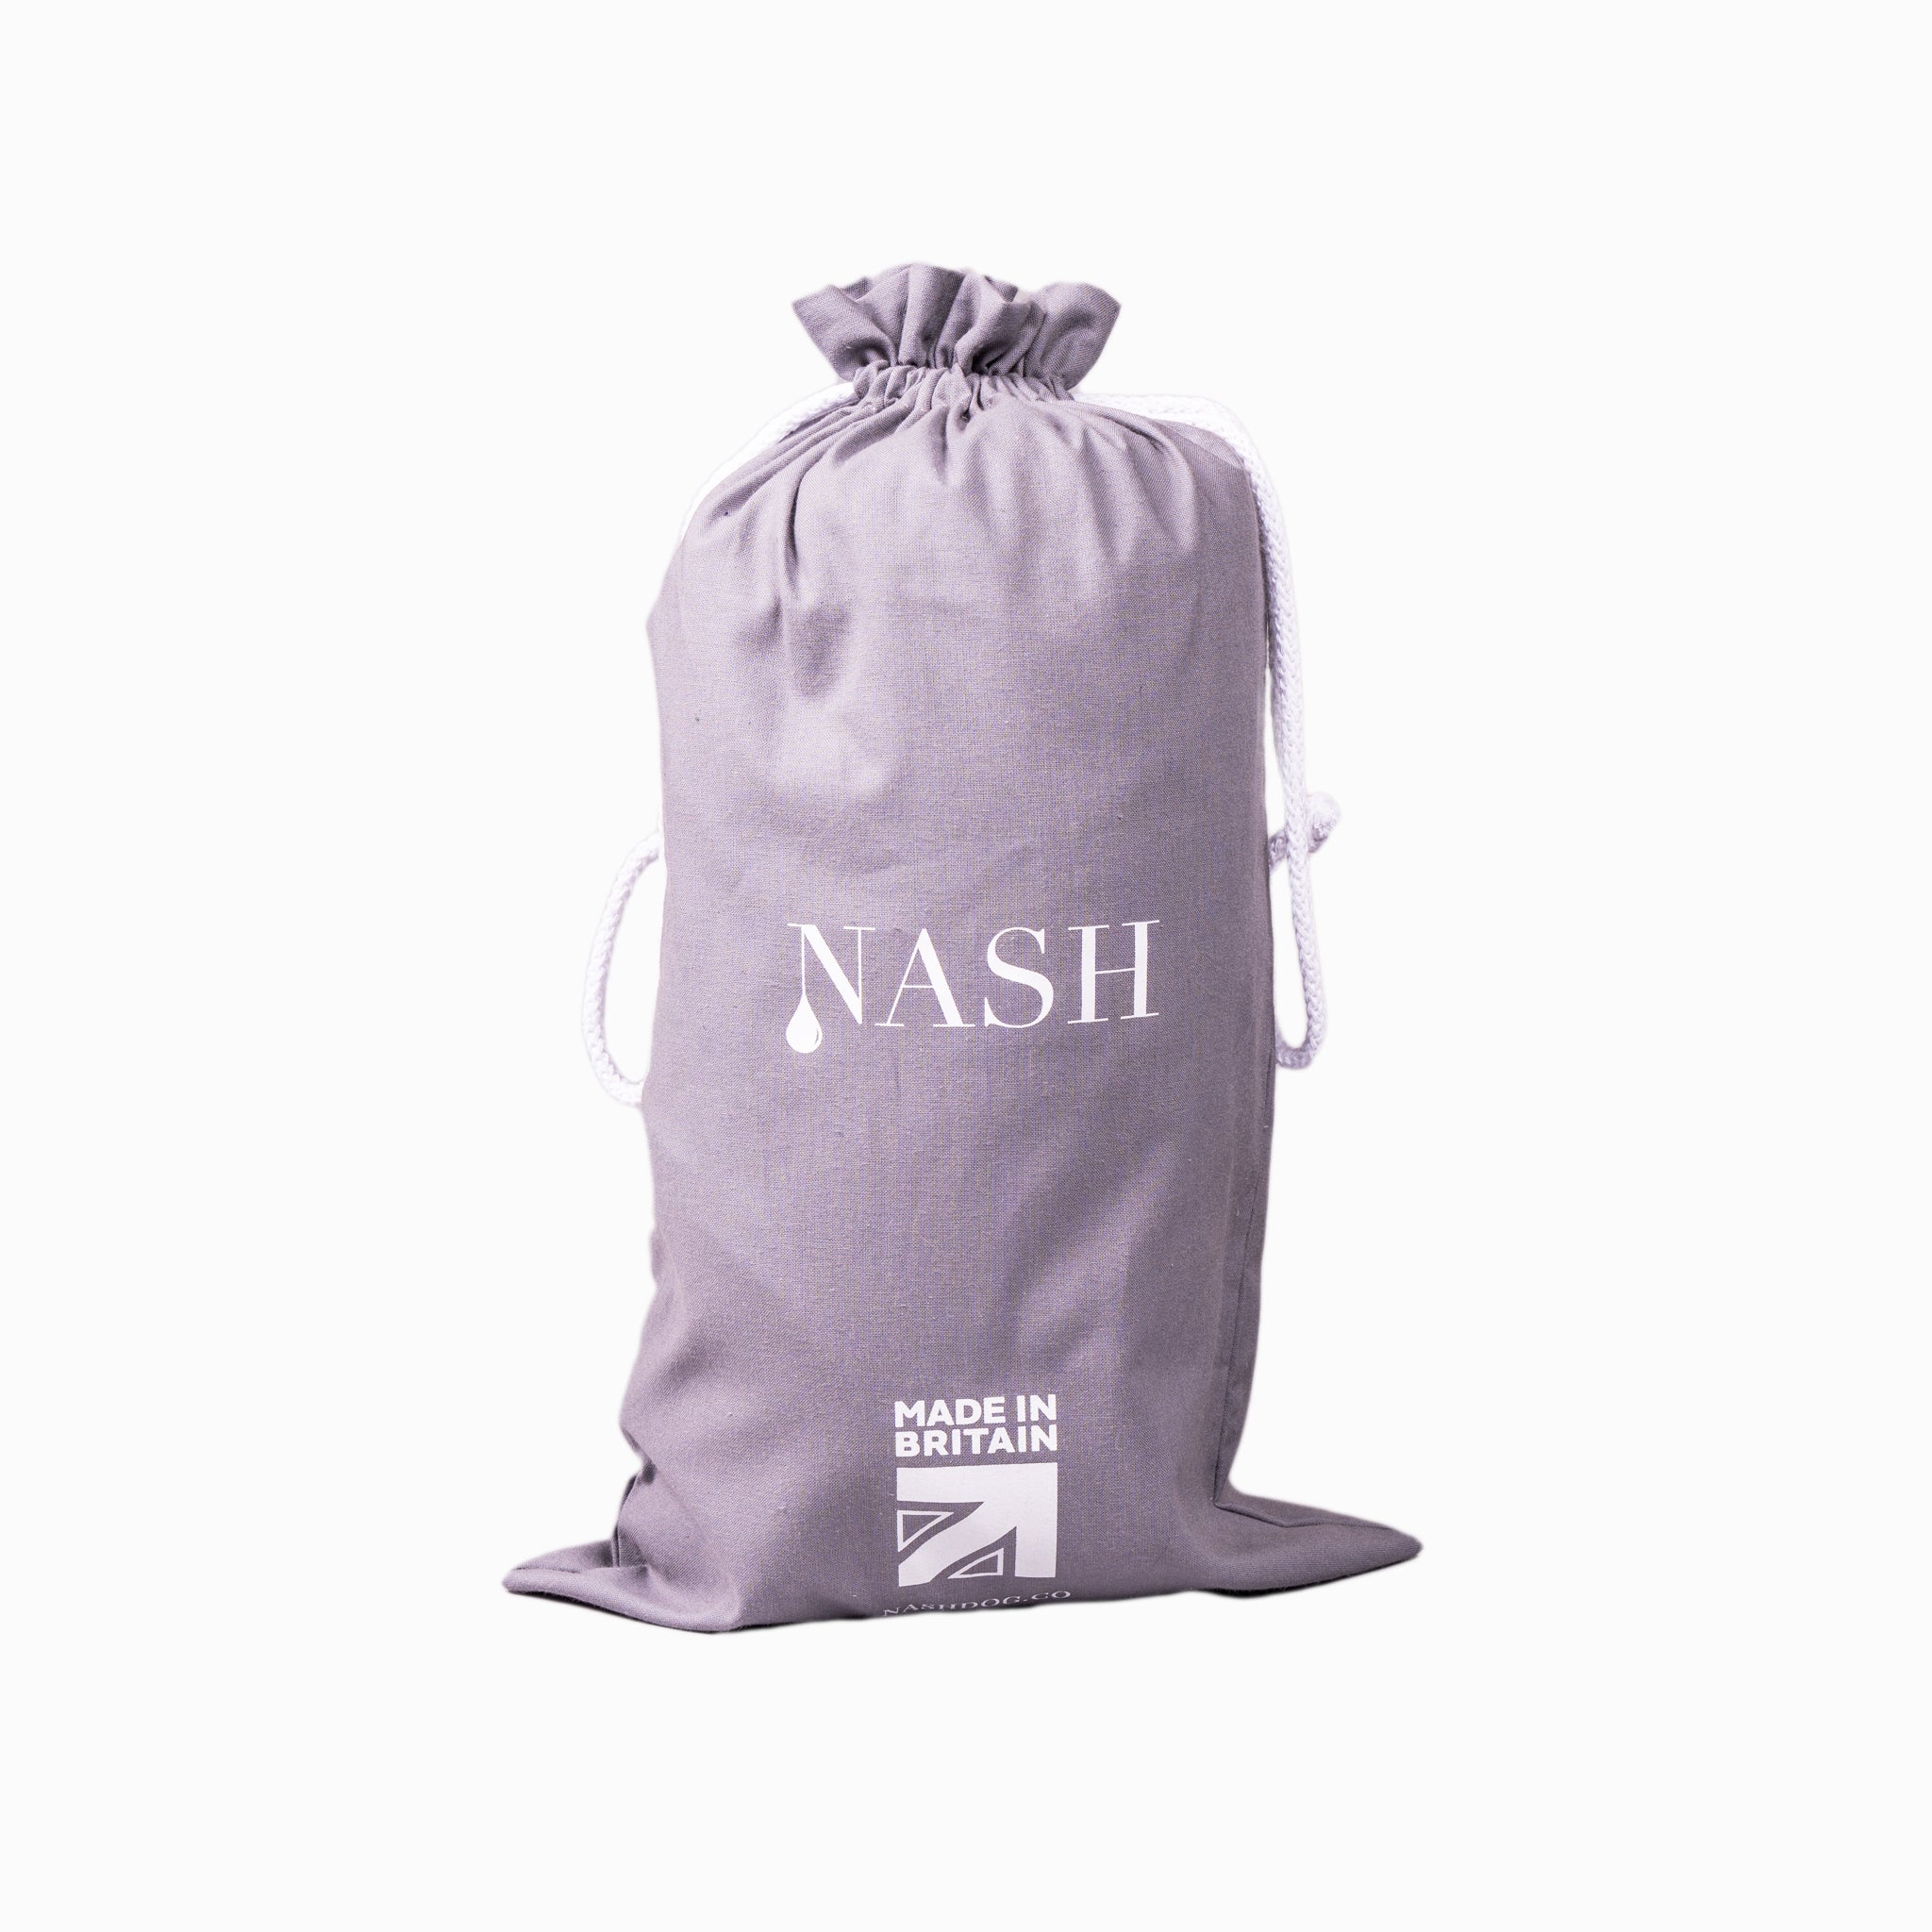 NASH reusable drawstring bag for the NASH bamboo dog bed cover. 